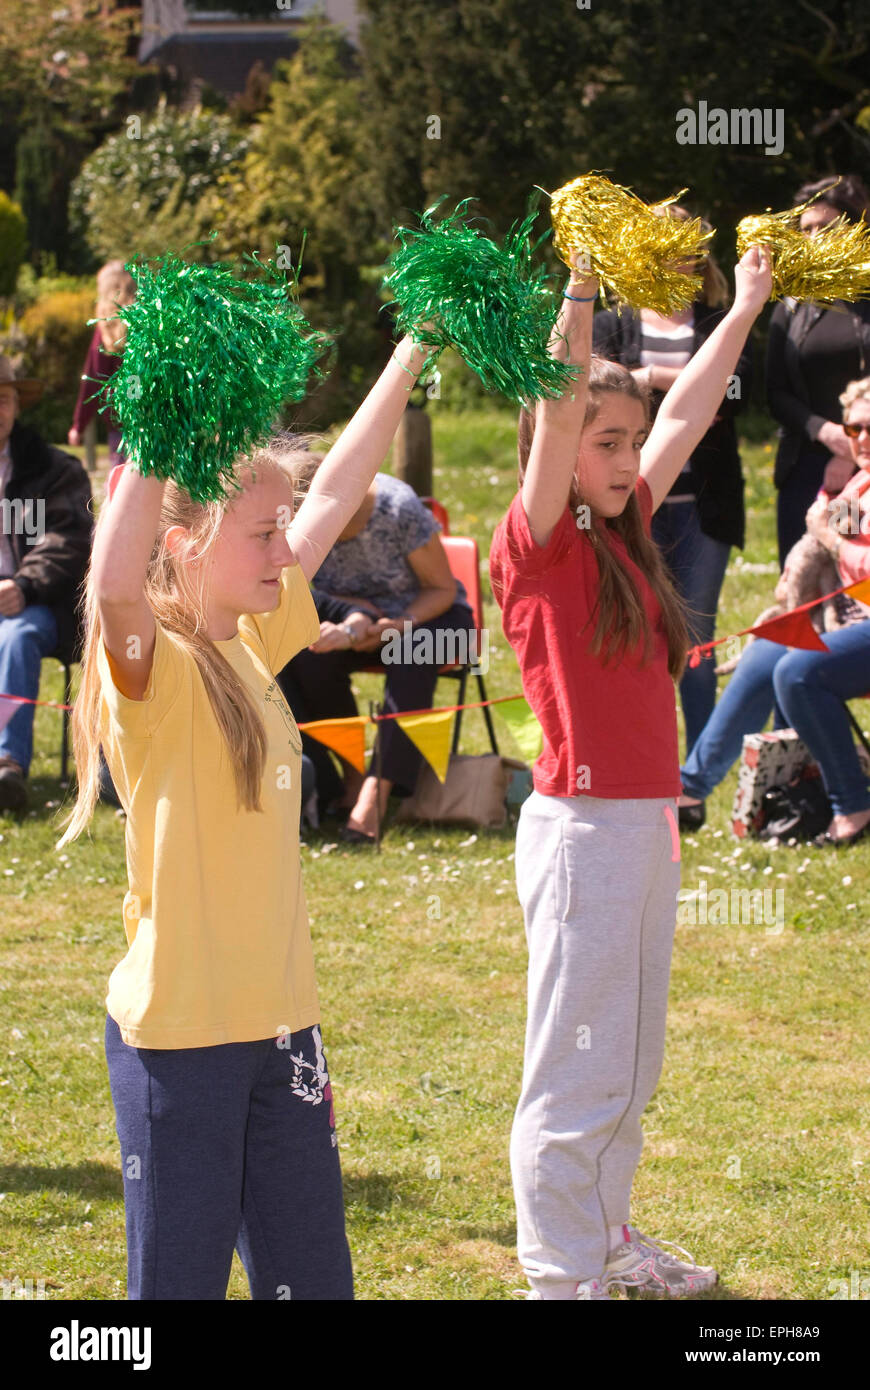 Young cheerleaders performing at a May Fair, Oakhanger, Hampshire, UK. Stock Photo